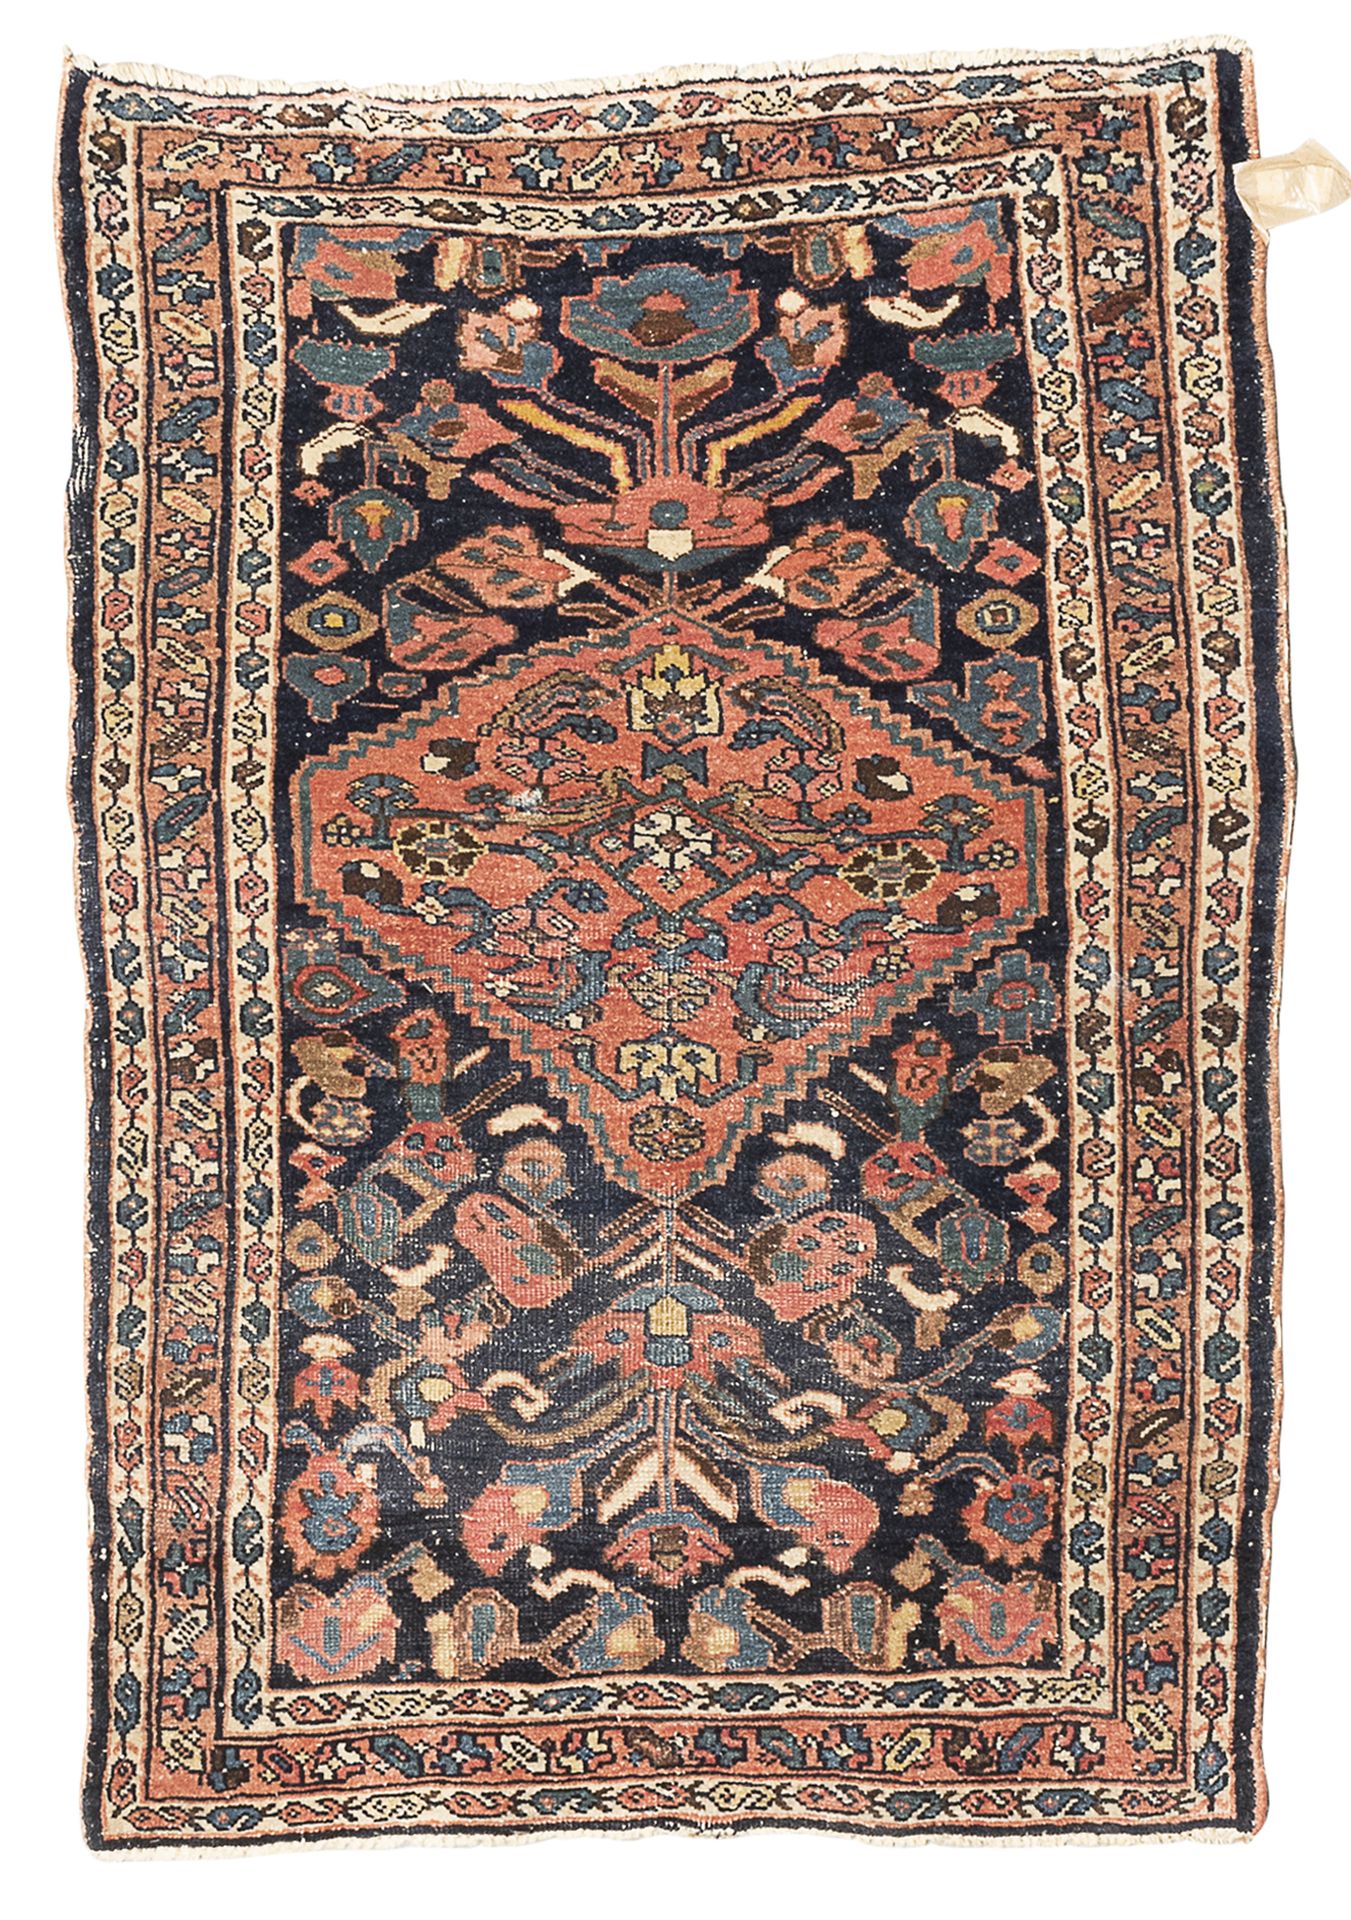 Null 小Saruk地毯，20世纪初

中央有一个菱形徽章和次要的Herati和叶子图案，背景是蓝色的，有一个菱形徽章。

尺寸为110 x 80厘米。